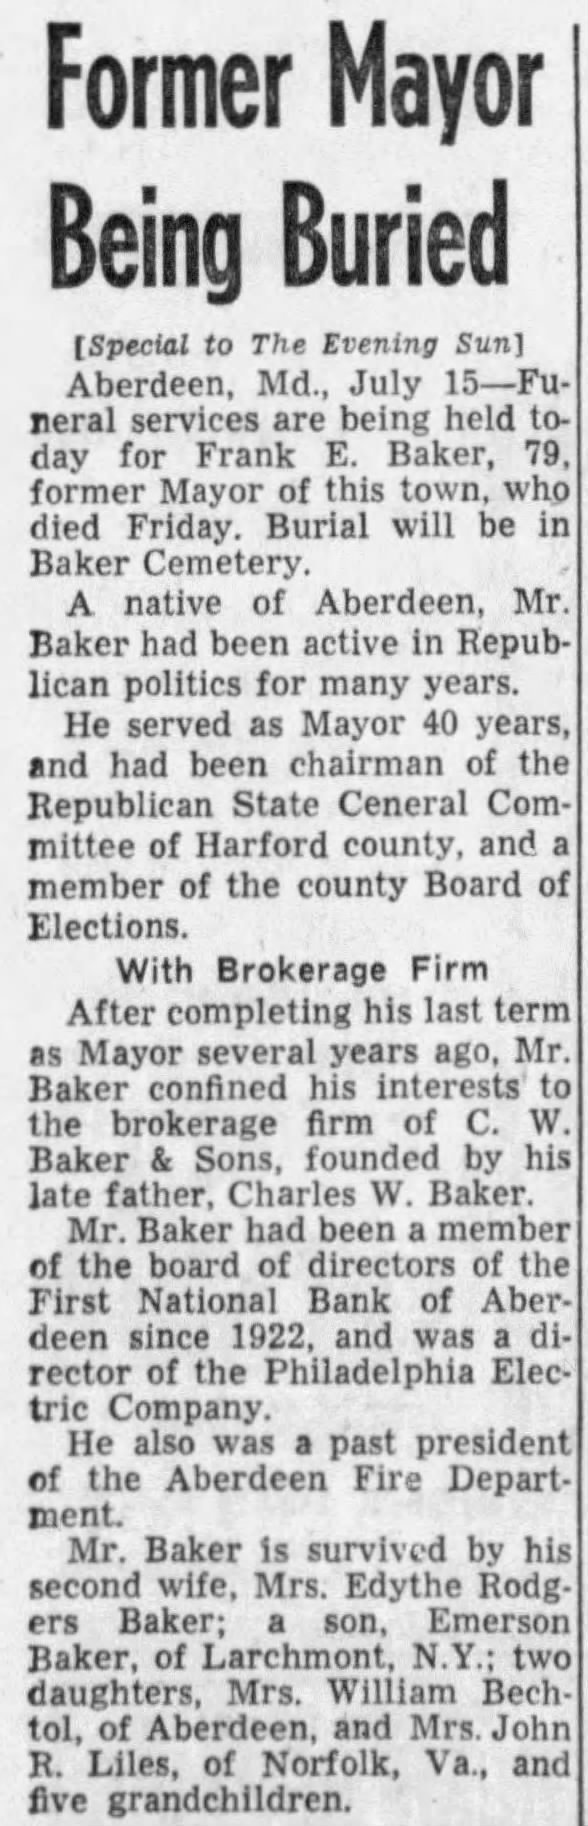 Former Mayor Being Buried; 15 Jul 1957; The Evening Sun; 4